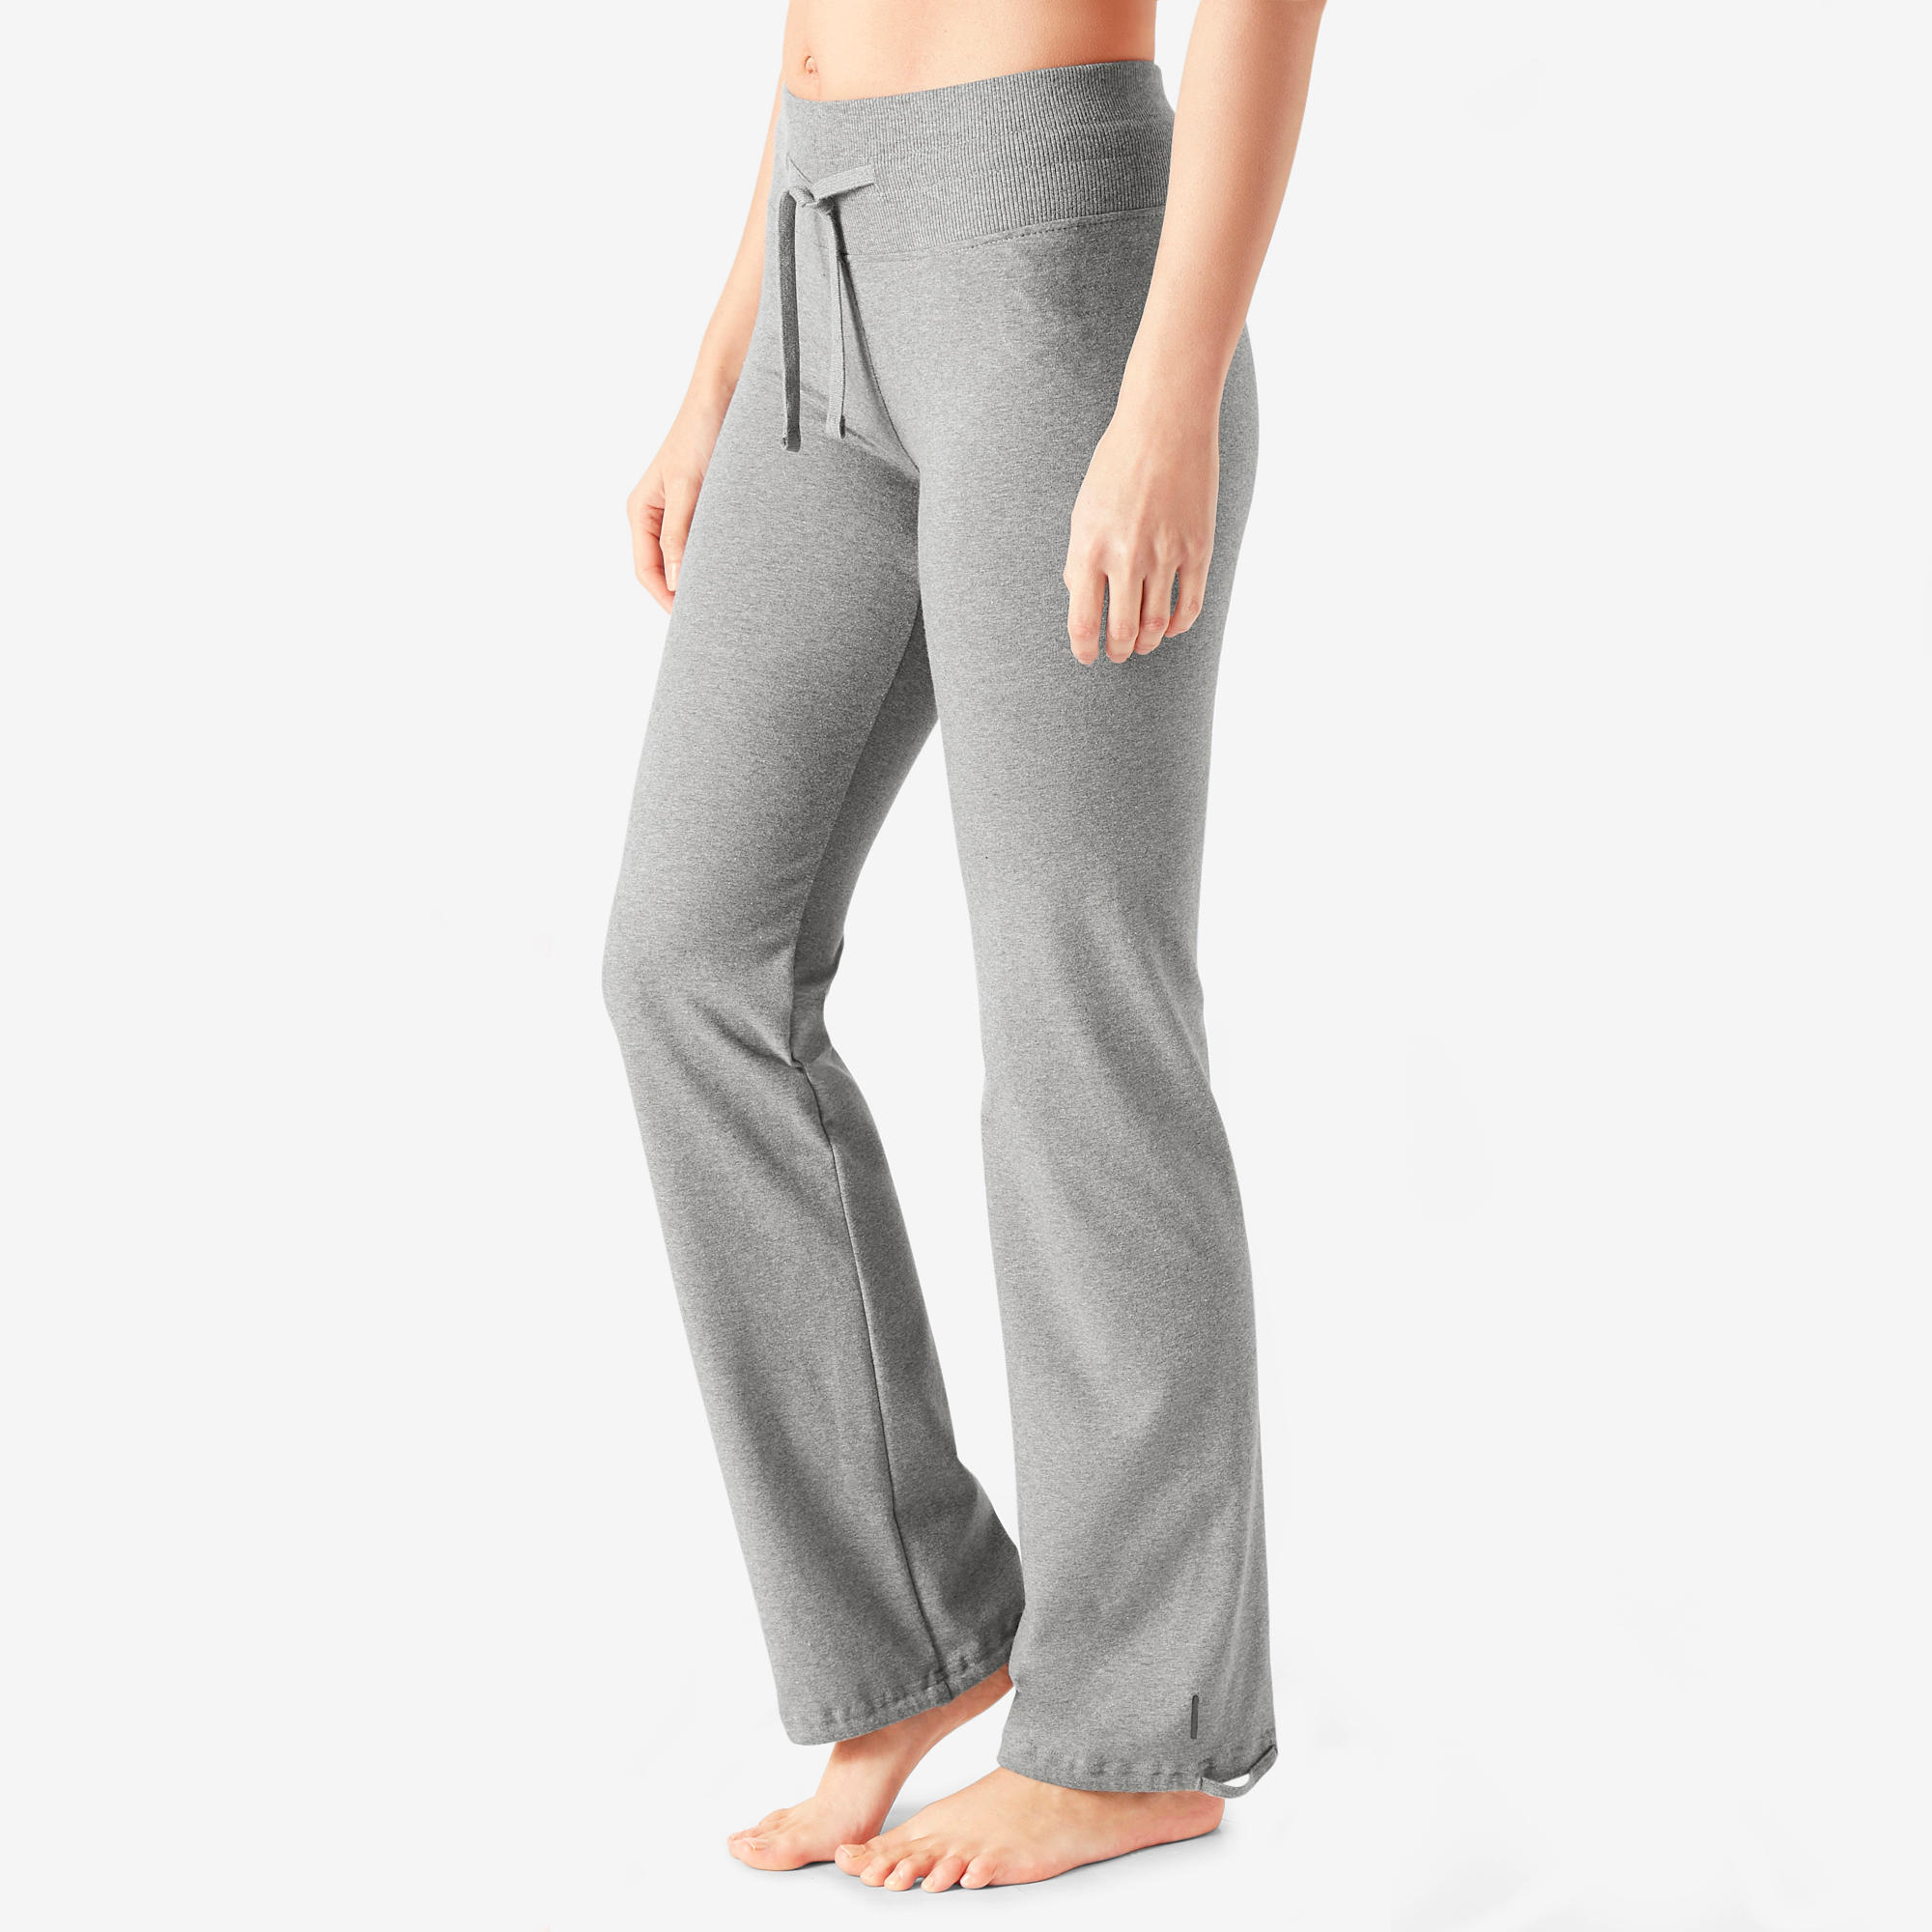 Grey Athletic Pants w Phone Pocket  Bluffworks